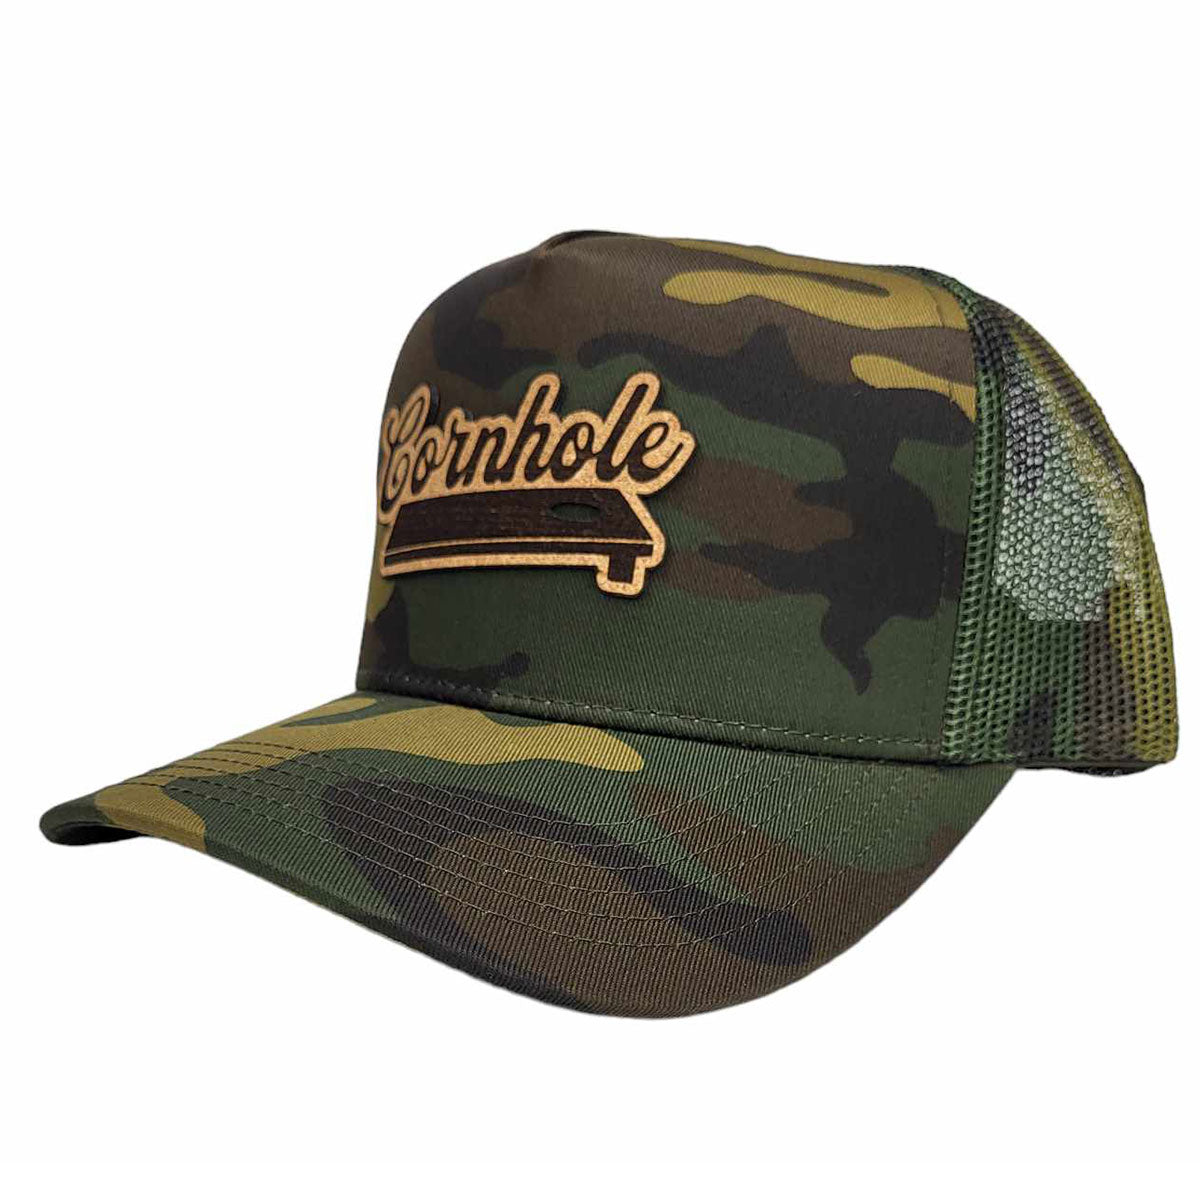 Cornhole Camo Hat